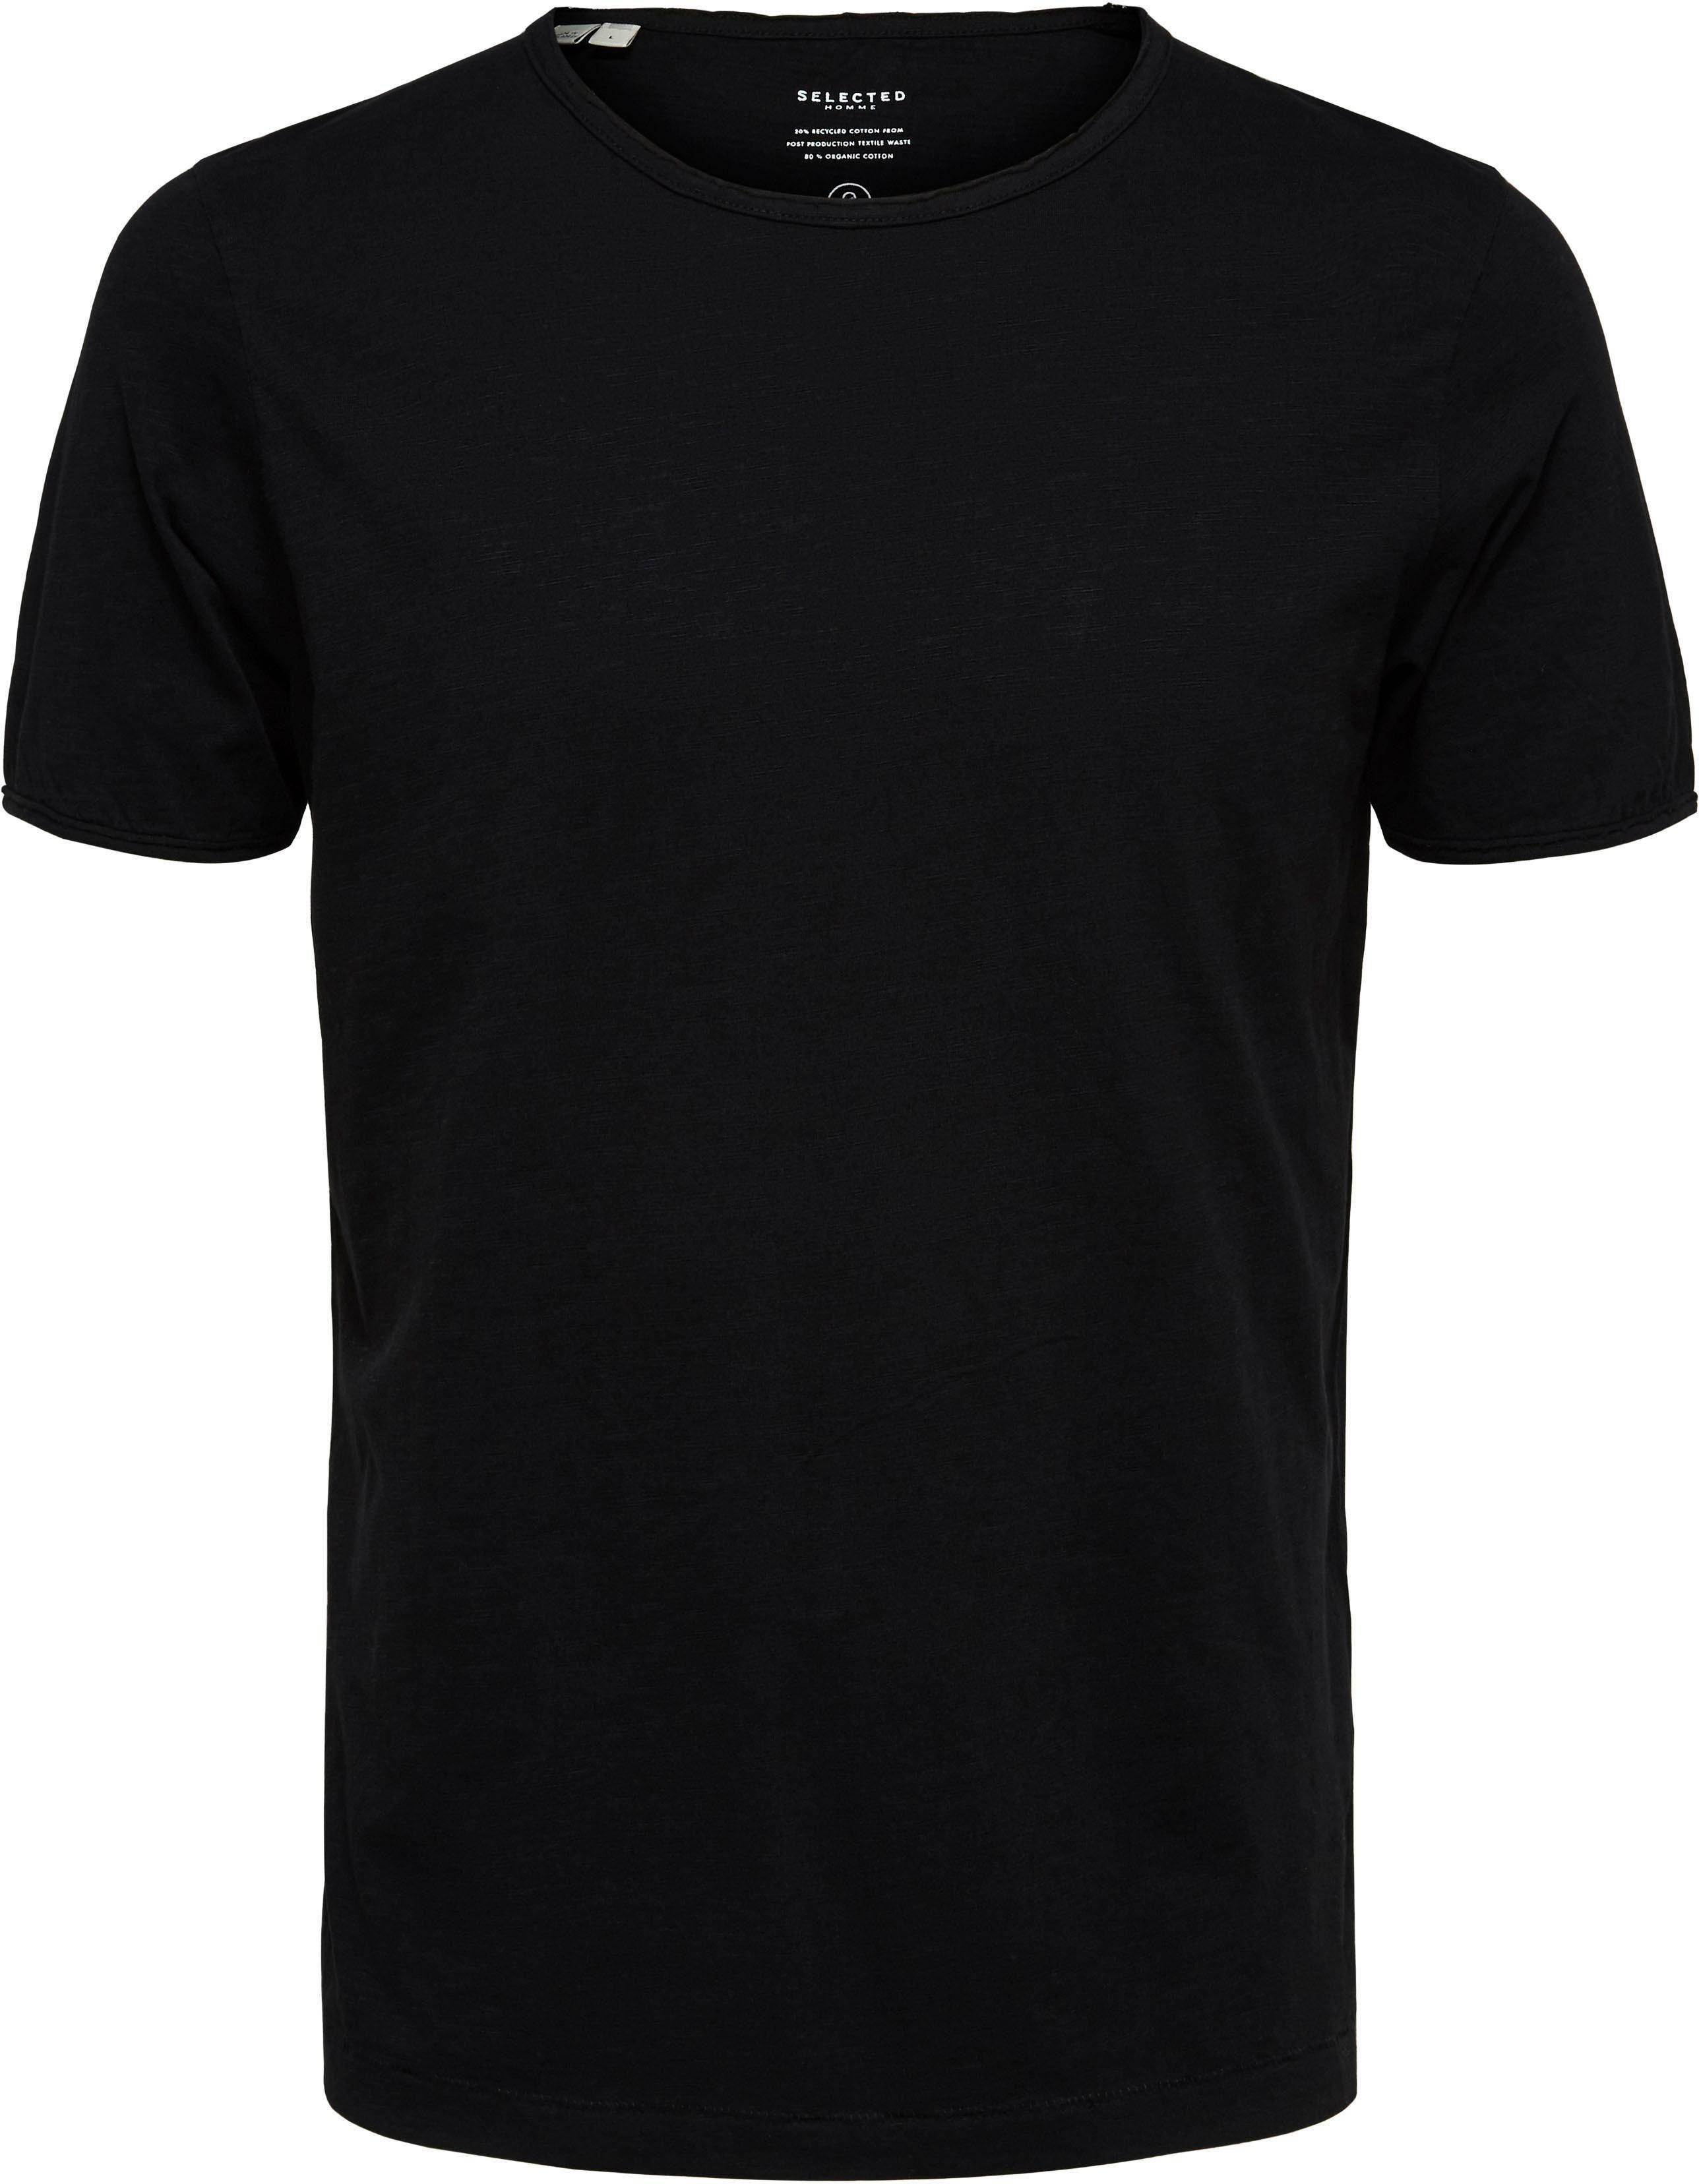 SELECTED HOMME T-Shirt MORGAN Black O-NECK TEE